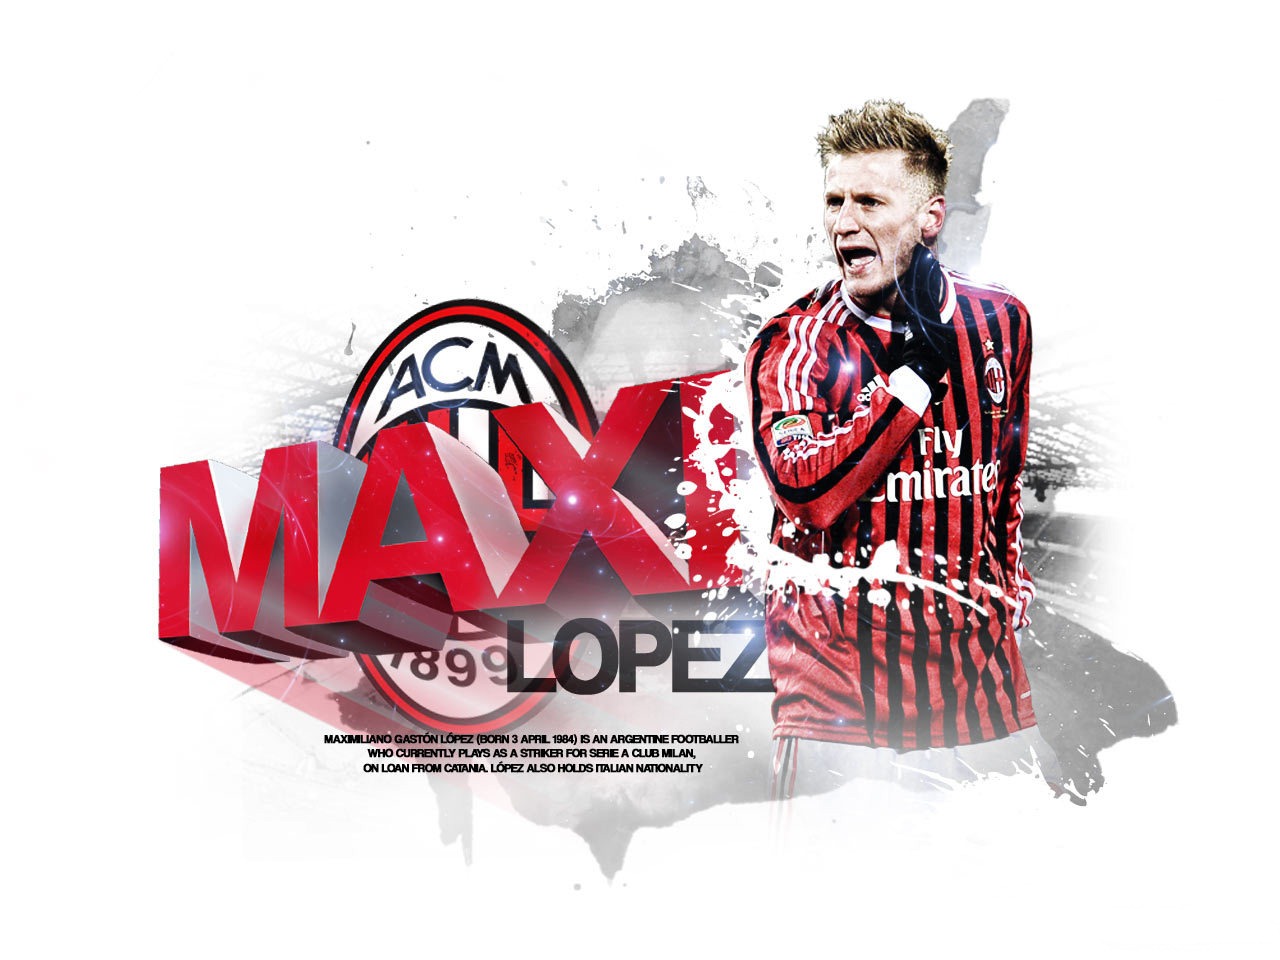 Wallpapers Soccer Legends Maxi Lopez 1280x960 #soccer